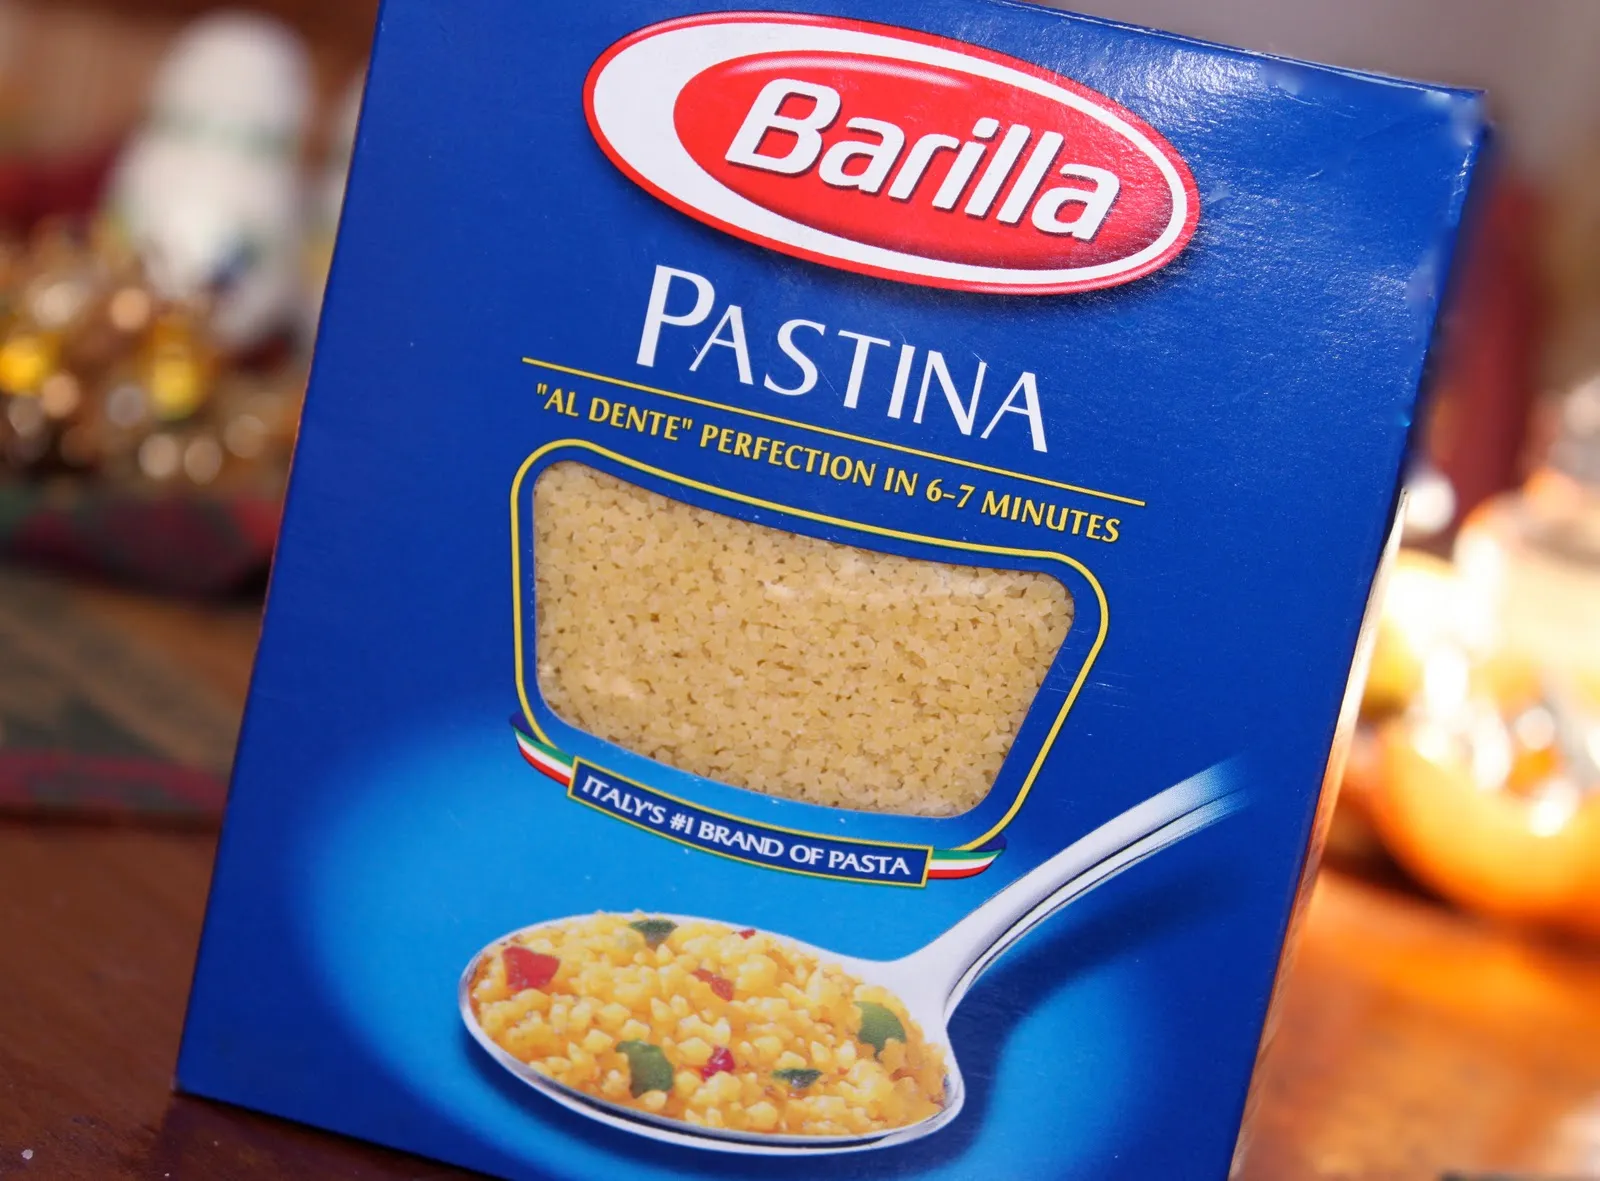 At Least We Still Have Barilla Pastina